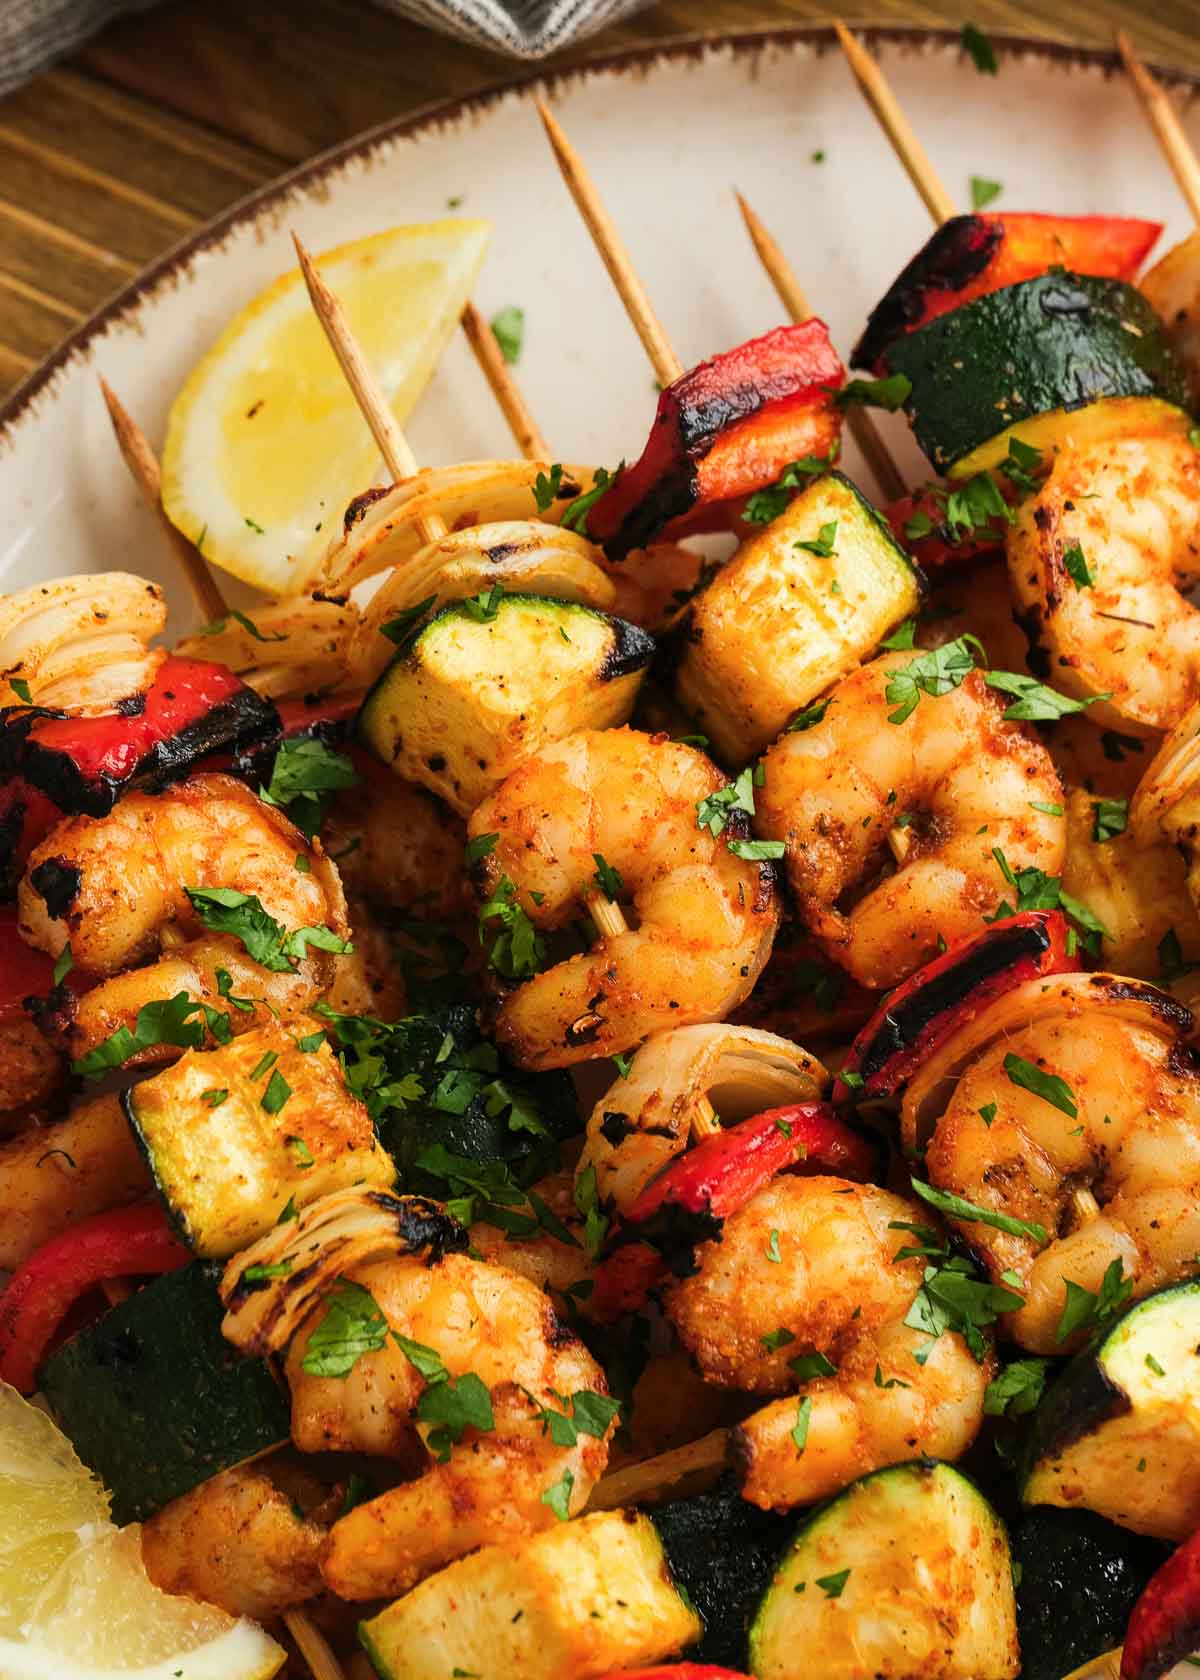 juicy grilled shrimp and vegetables assembled on skewers for easy summer meal